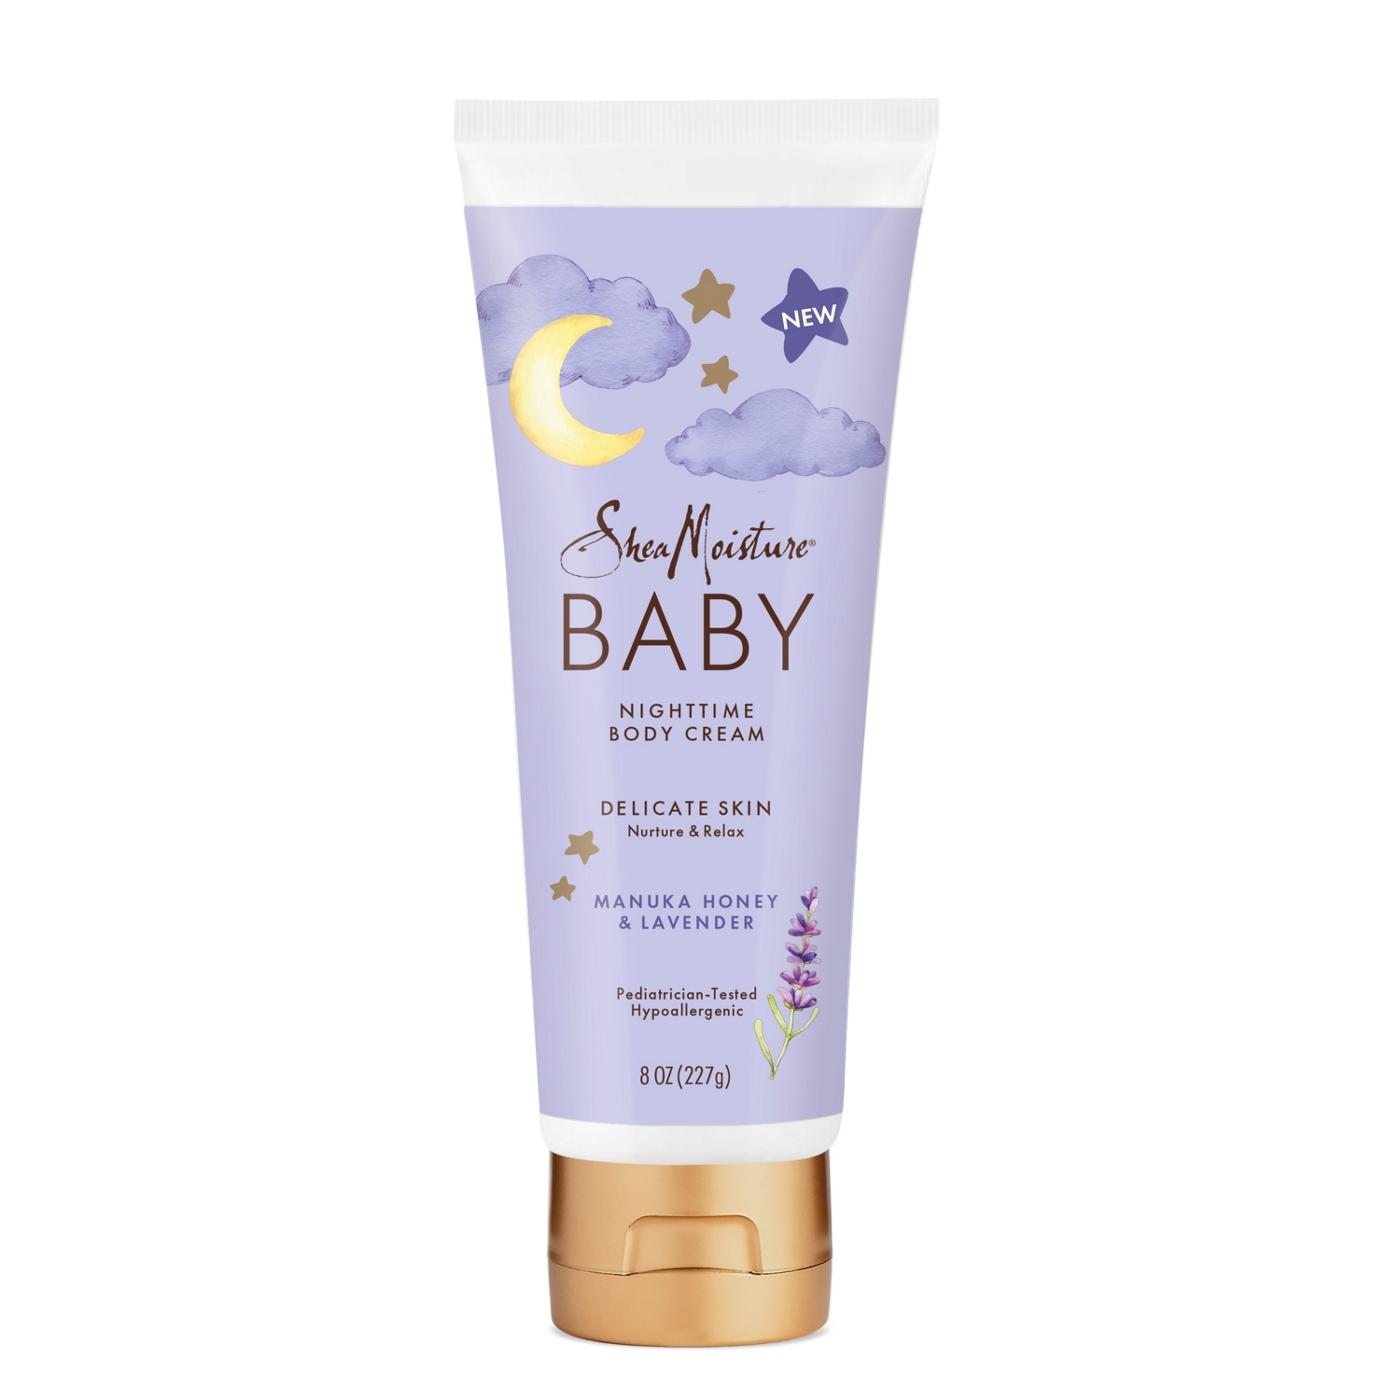 SheaMoisture Baby Nighttime Body Cream - Manuka Honey & Lavender; image 1 of 6